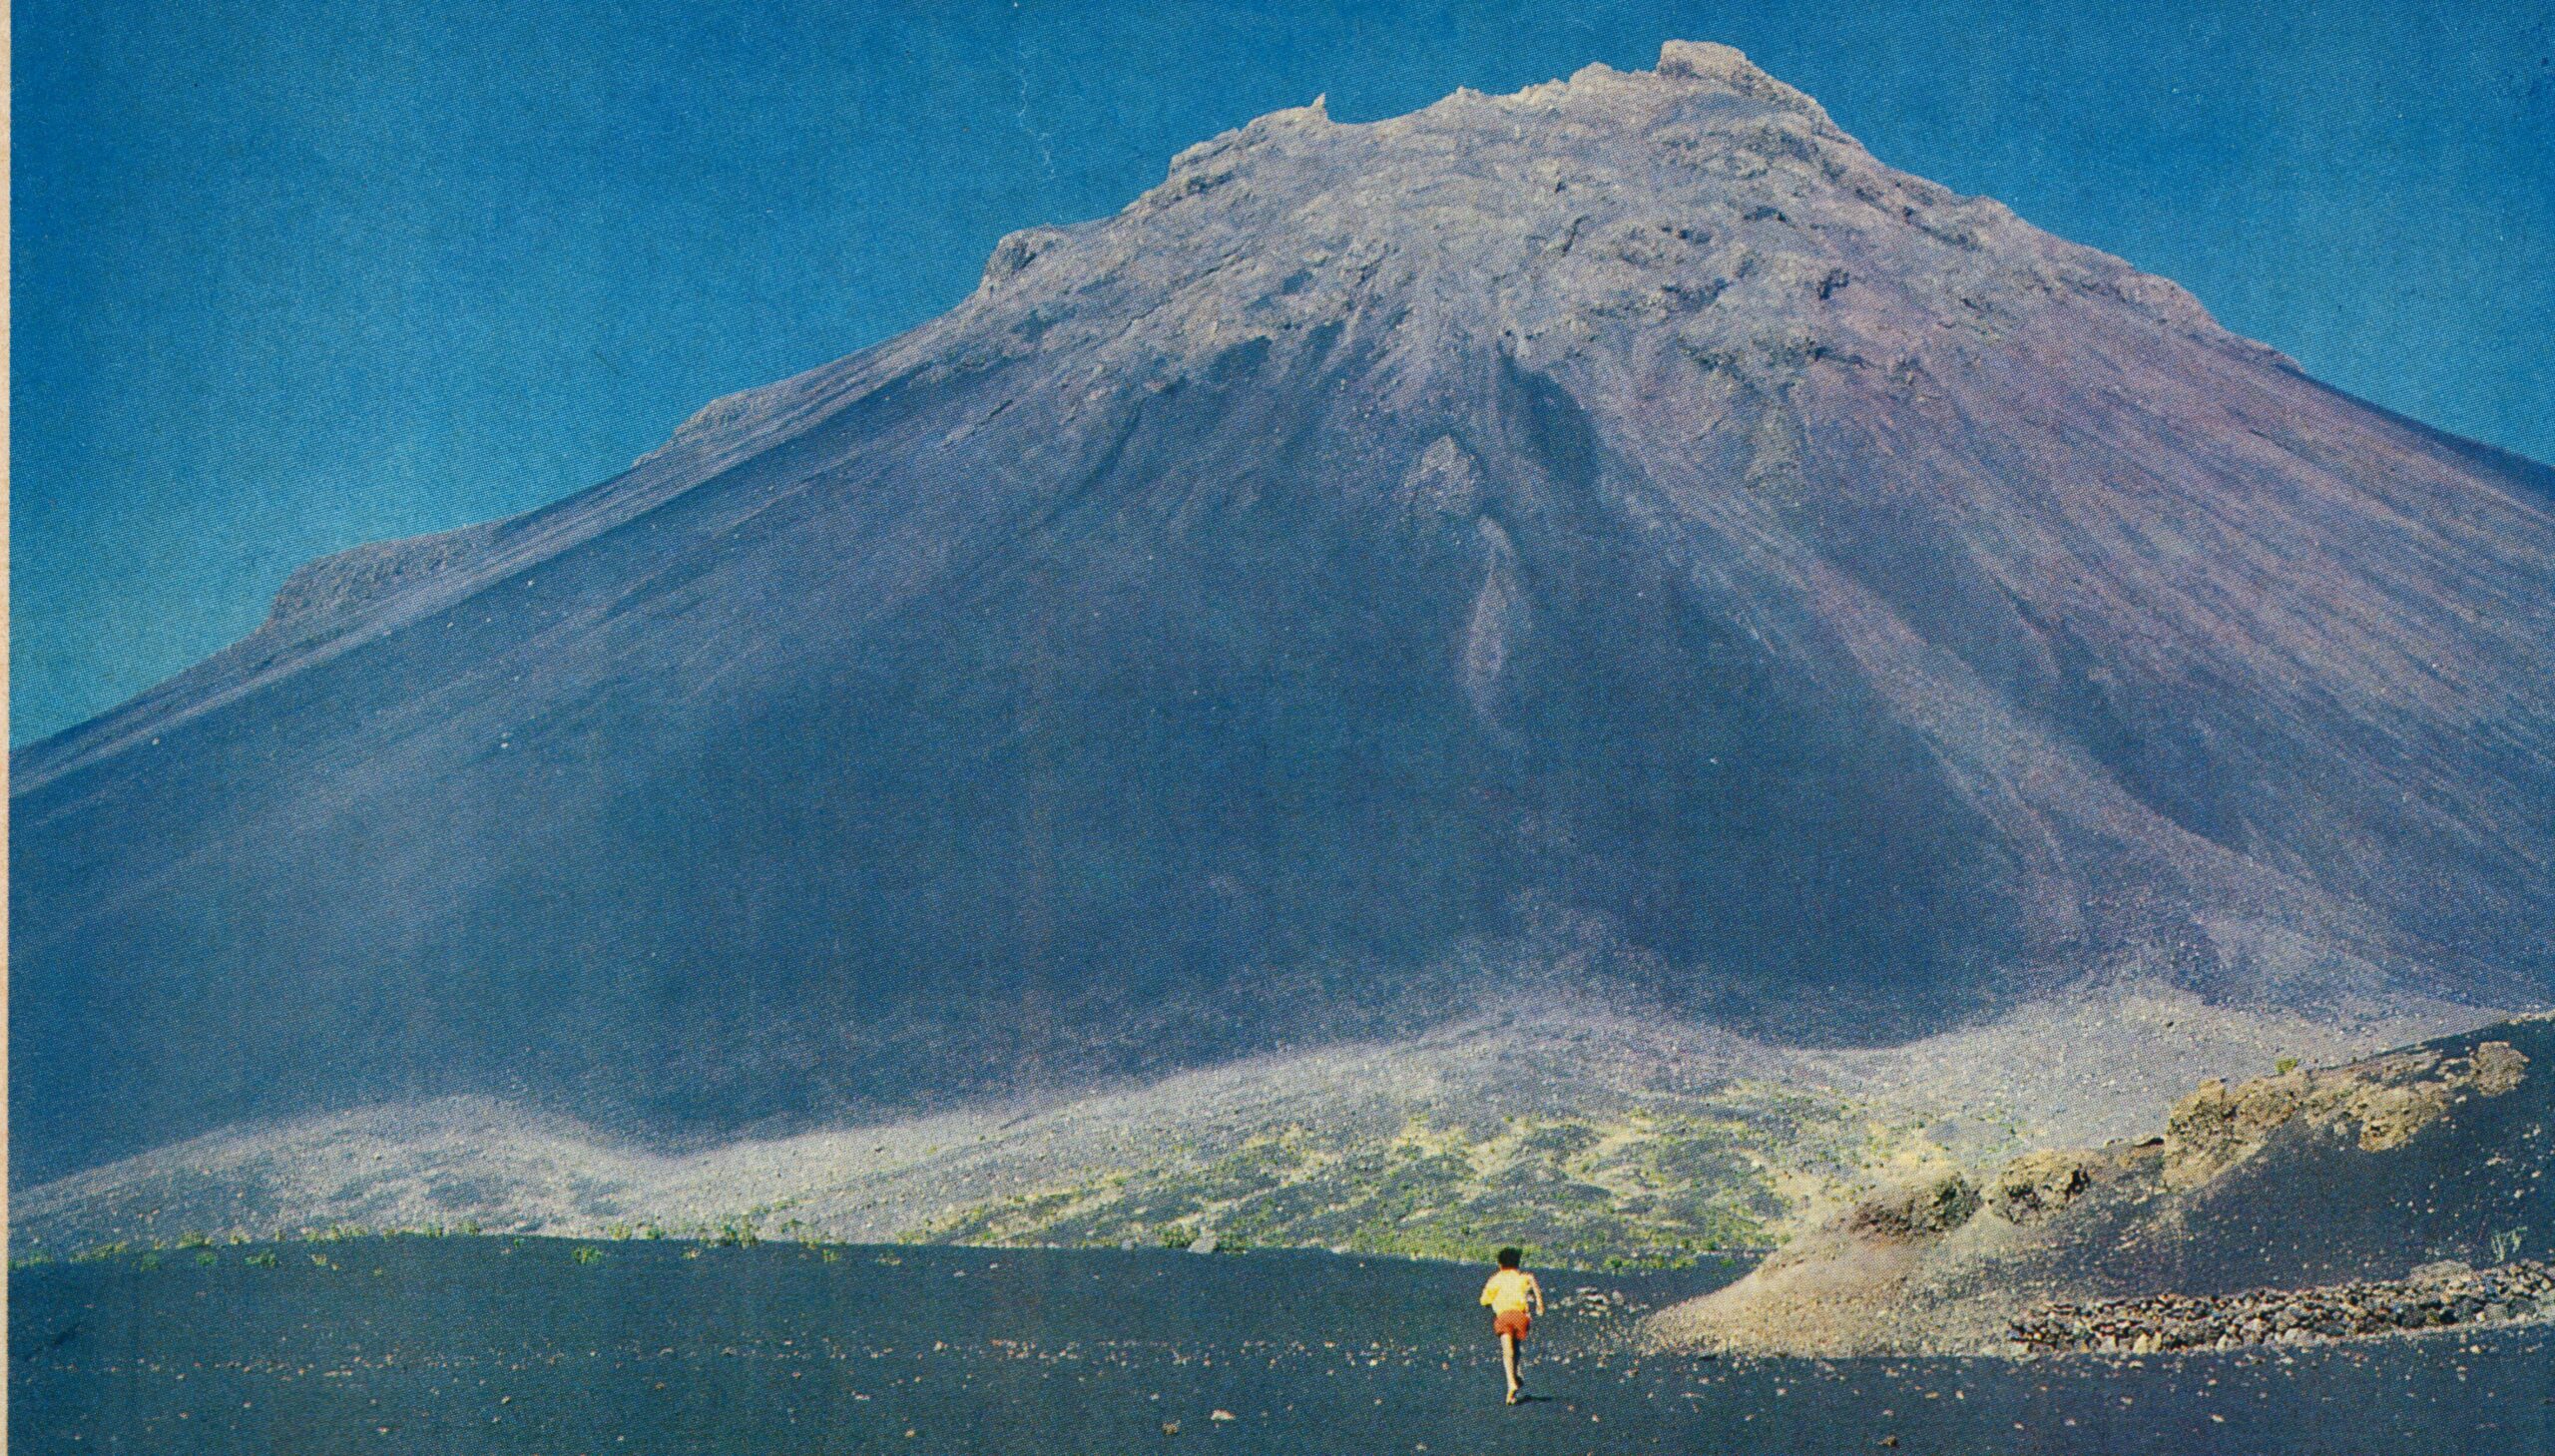 Carlos på vei mot vulkantoppen Pico.